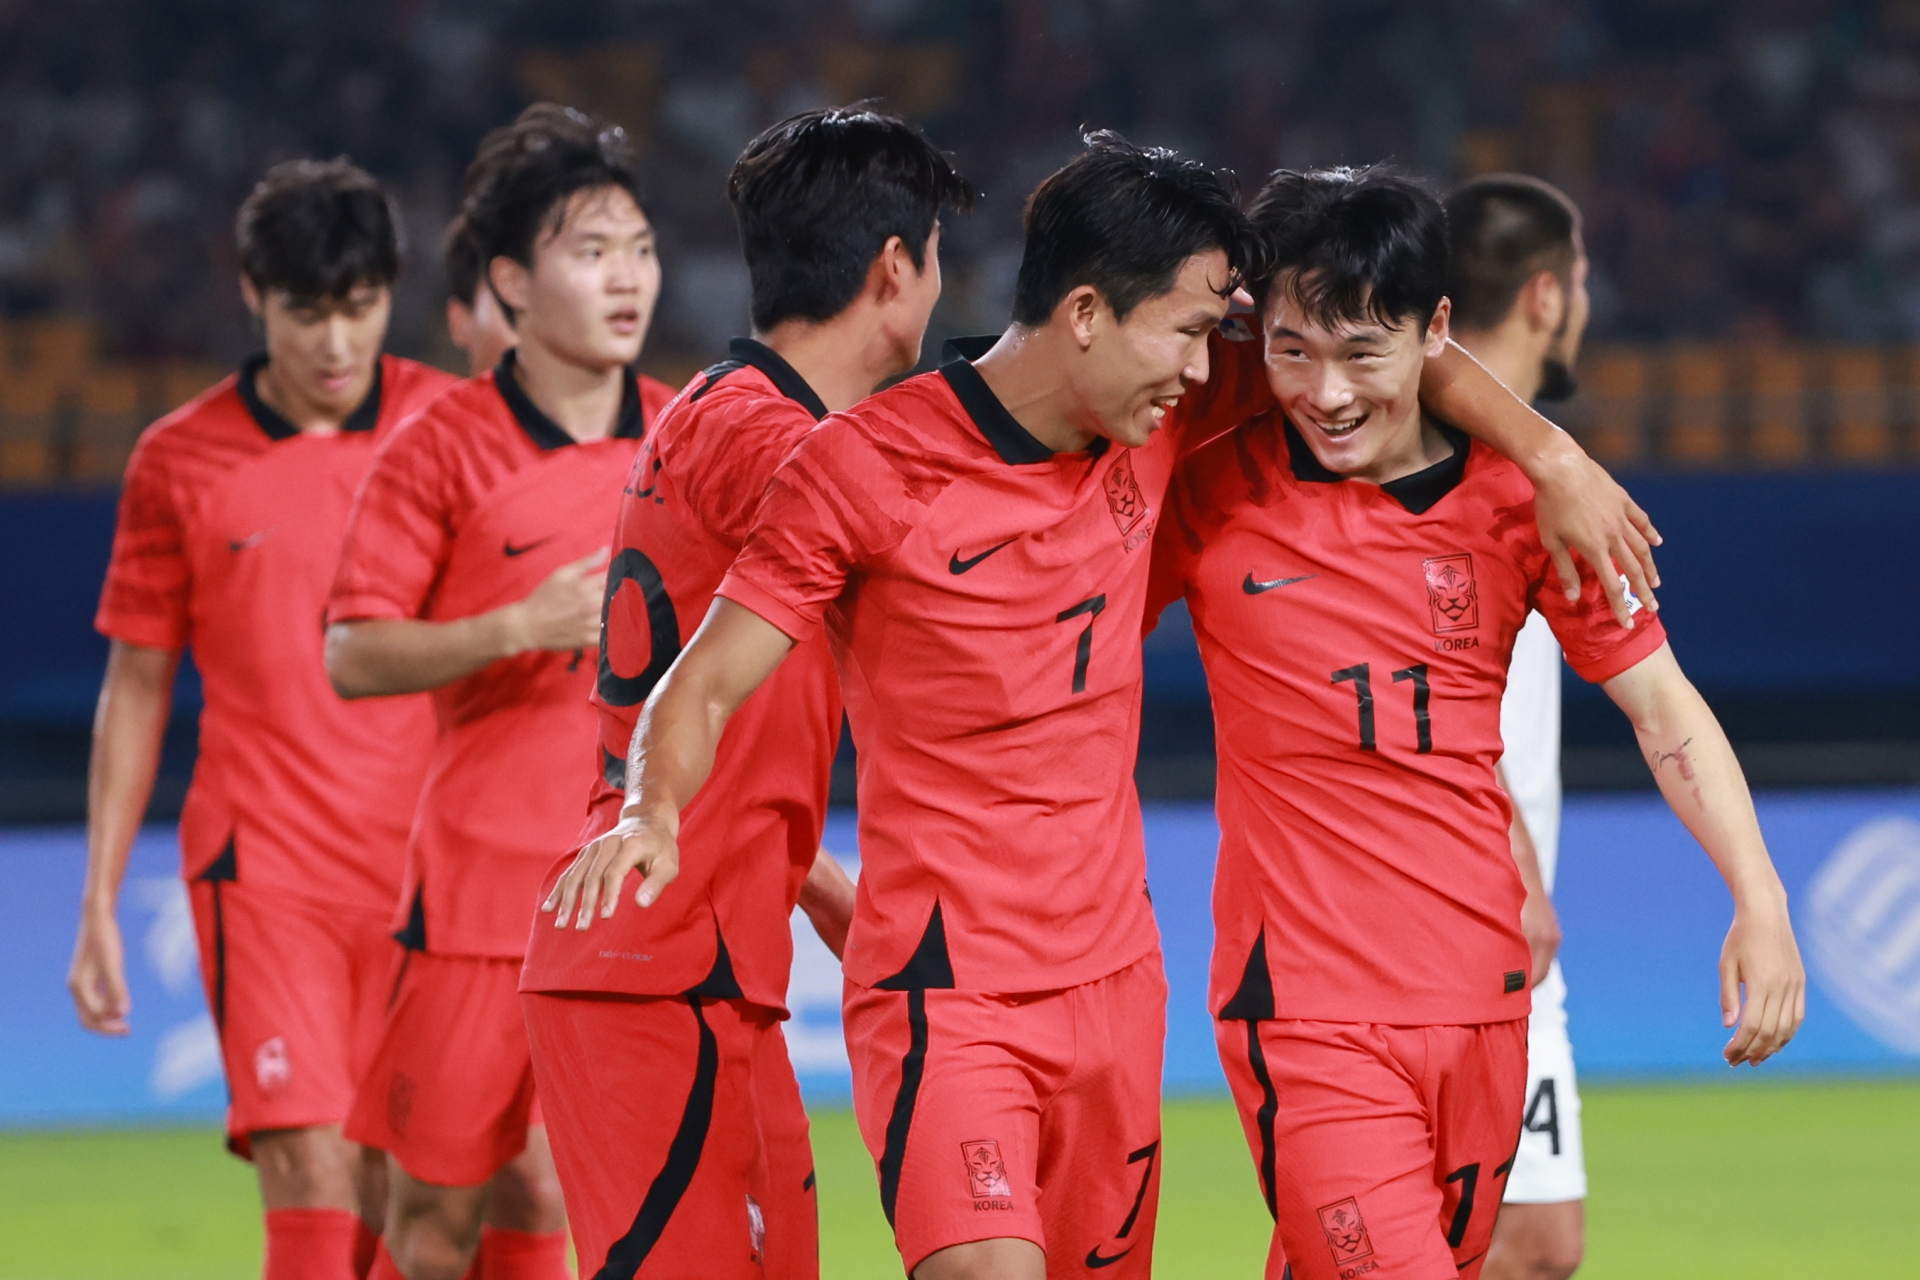 Korea U-24 Soccer Team Defeats Kyrgyzstan and Advances to the Quarterfinals of the Asian Games